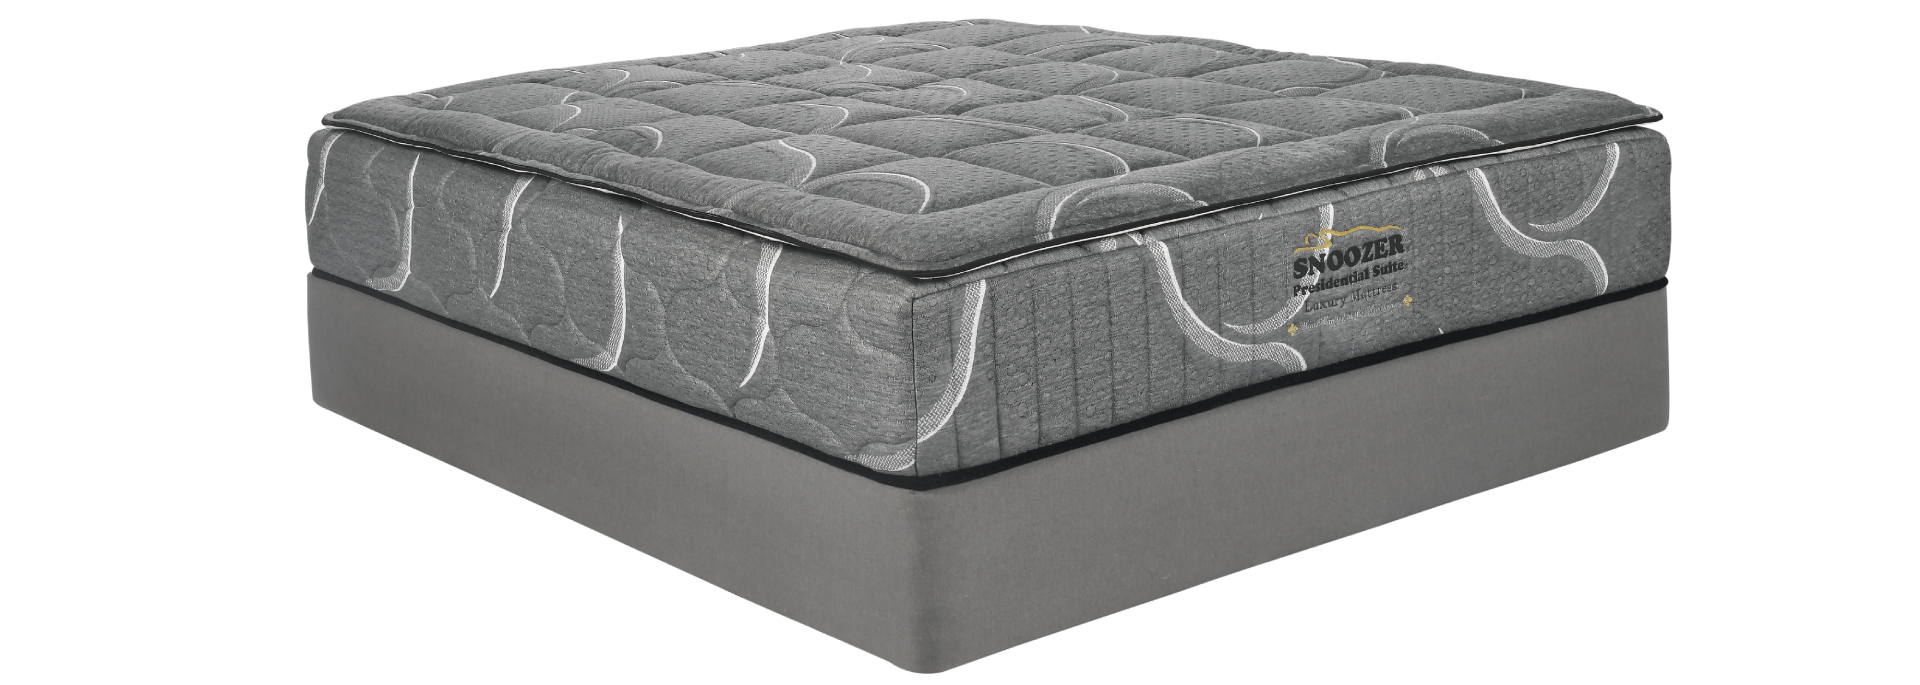 snoozer bed mattress